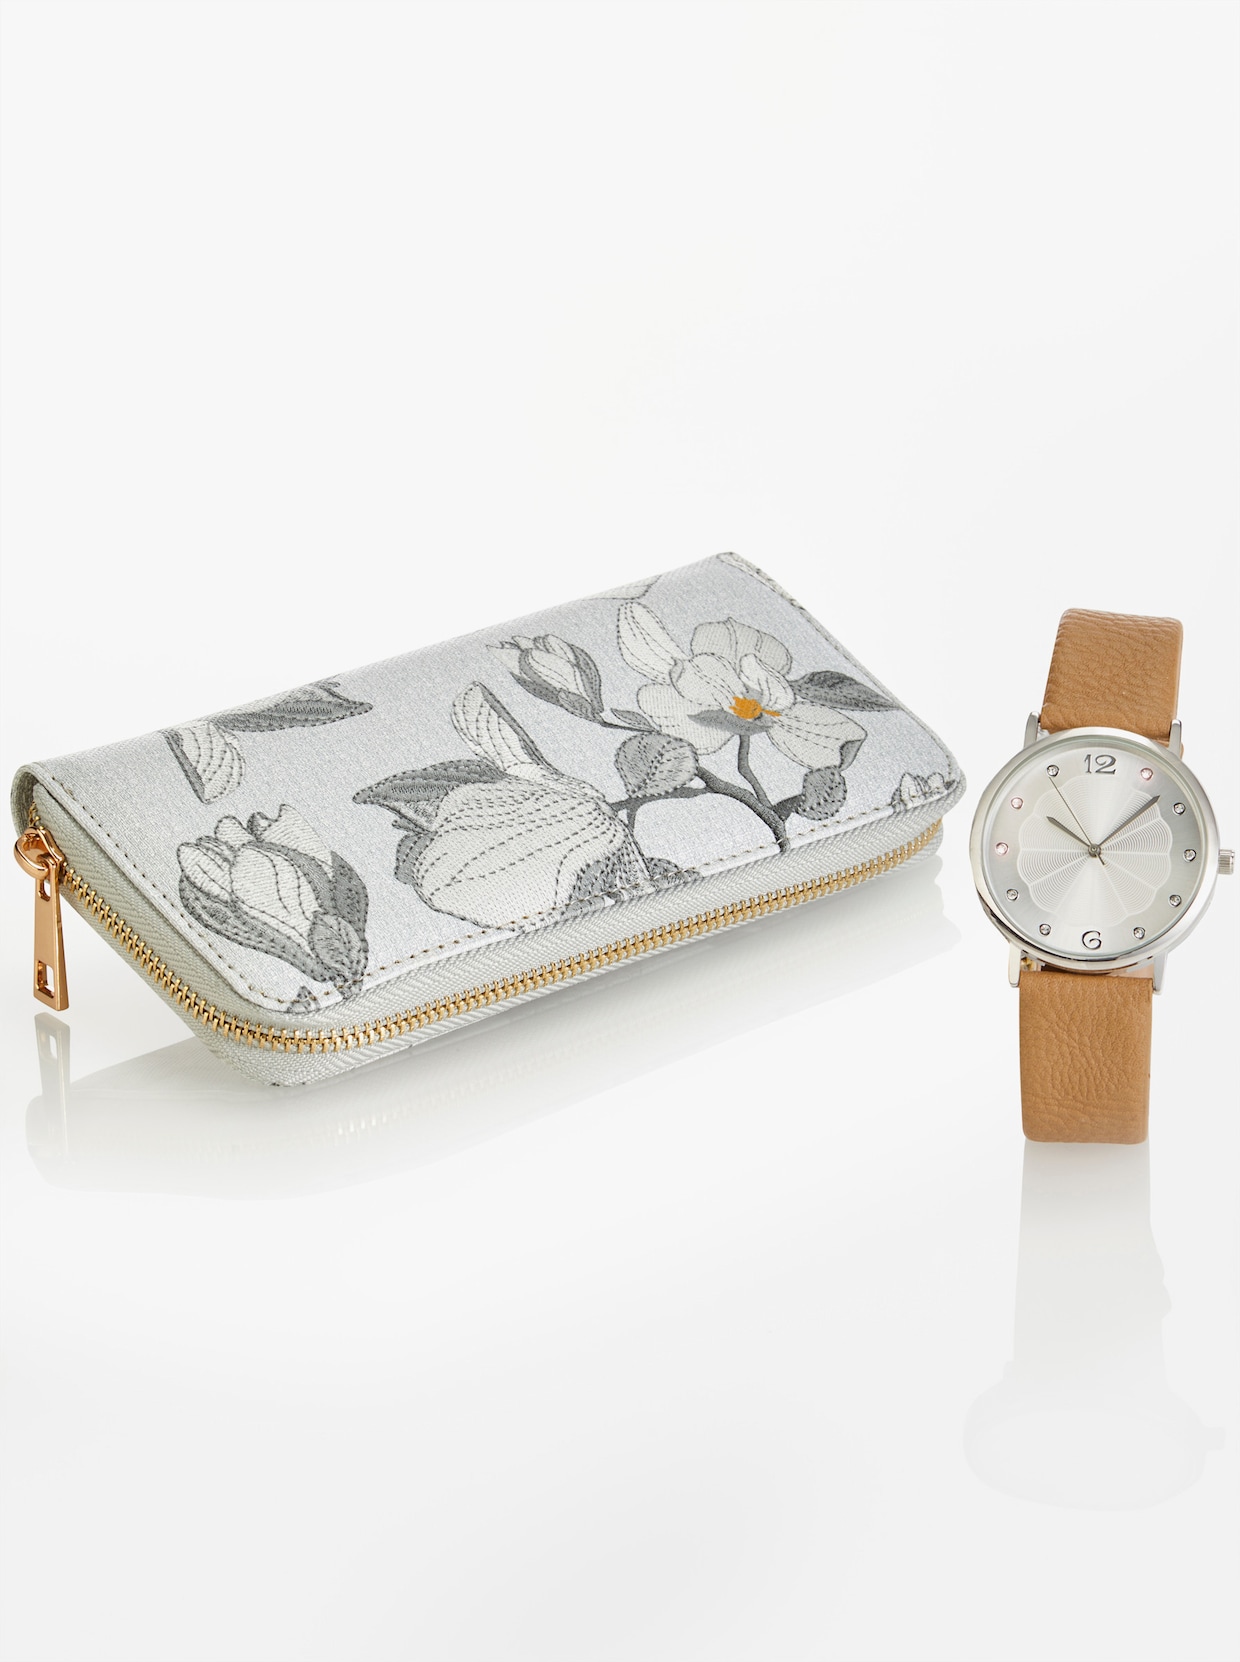 Plånbok + klocka - grå, blommig